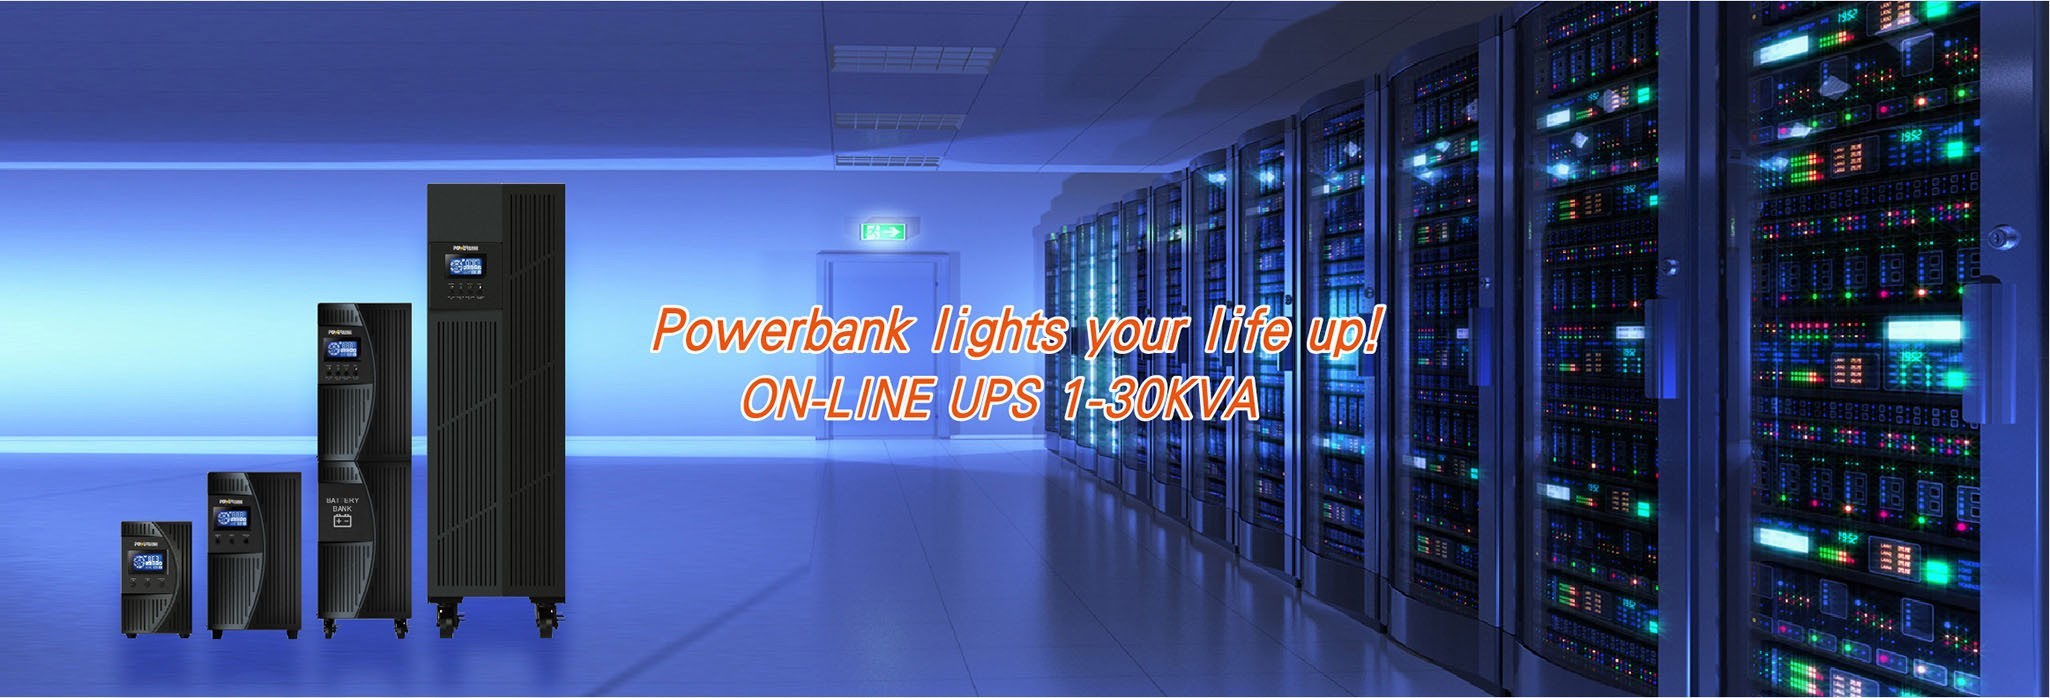 Powerbank lights your life up!